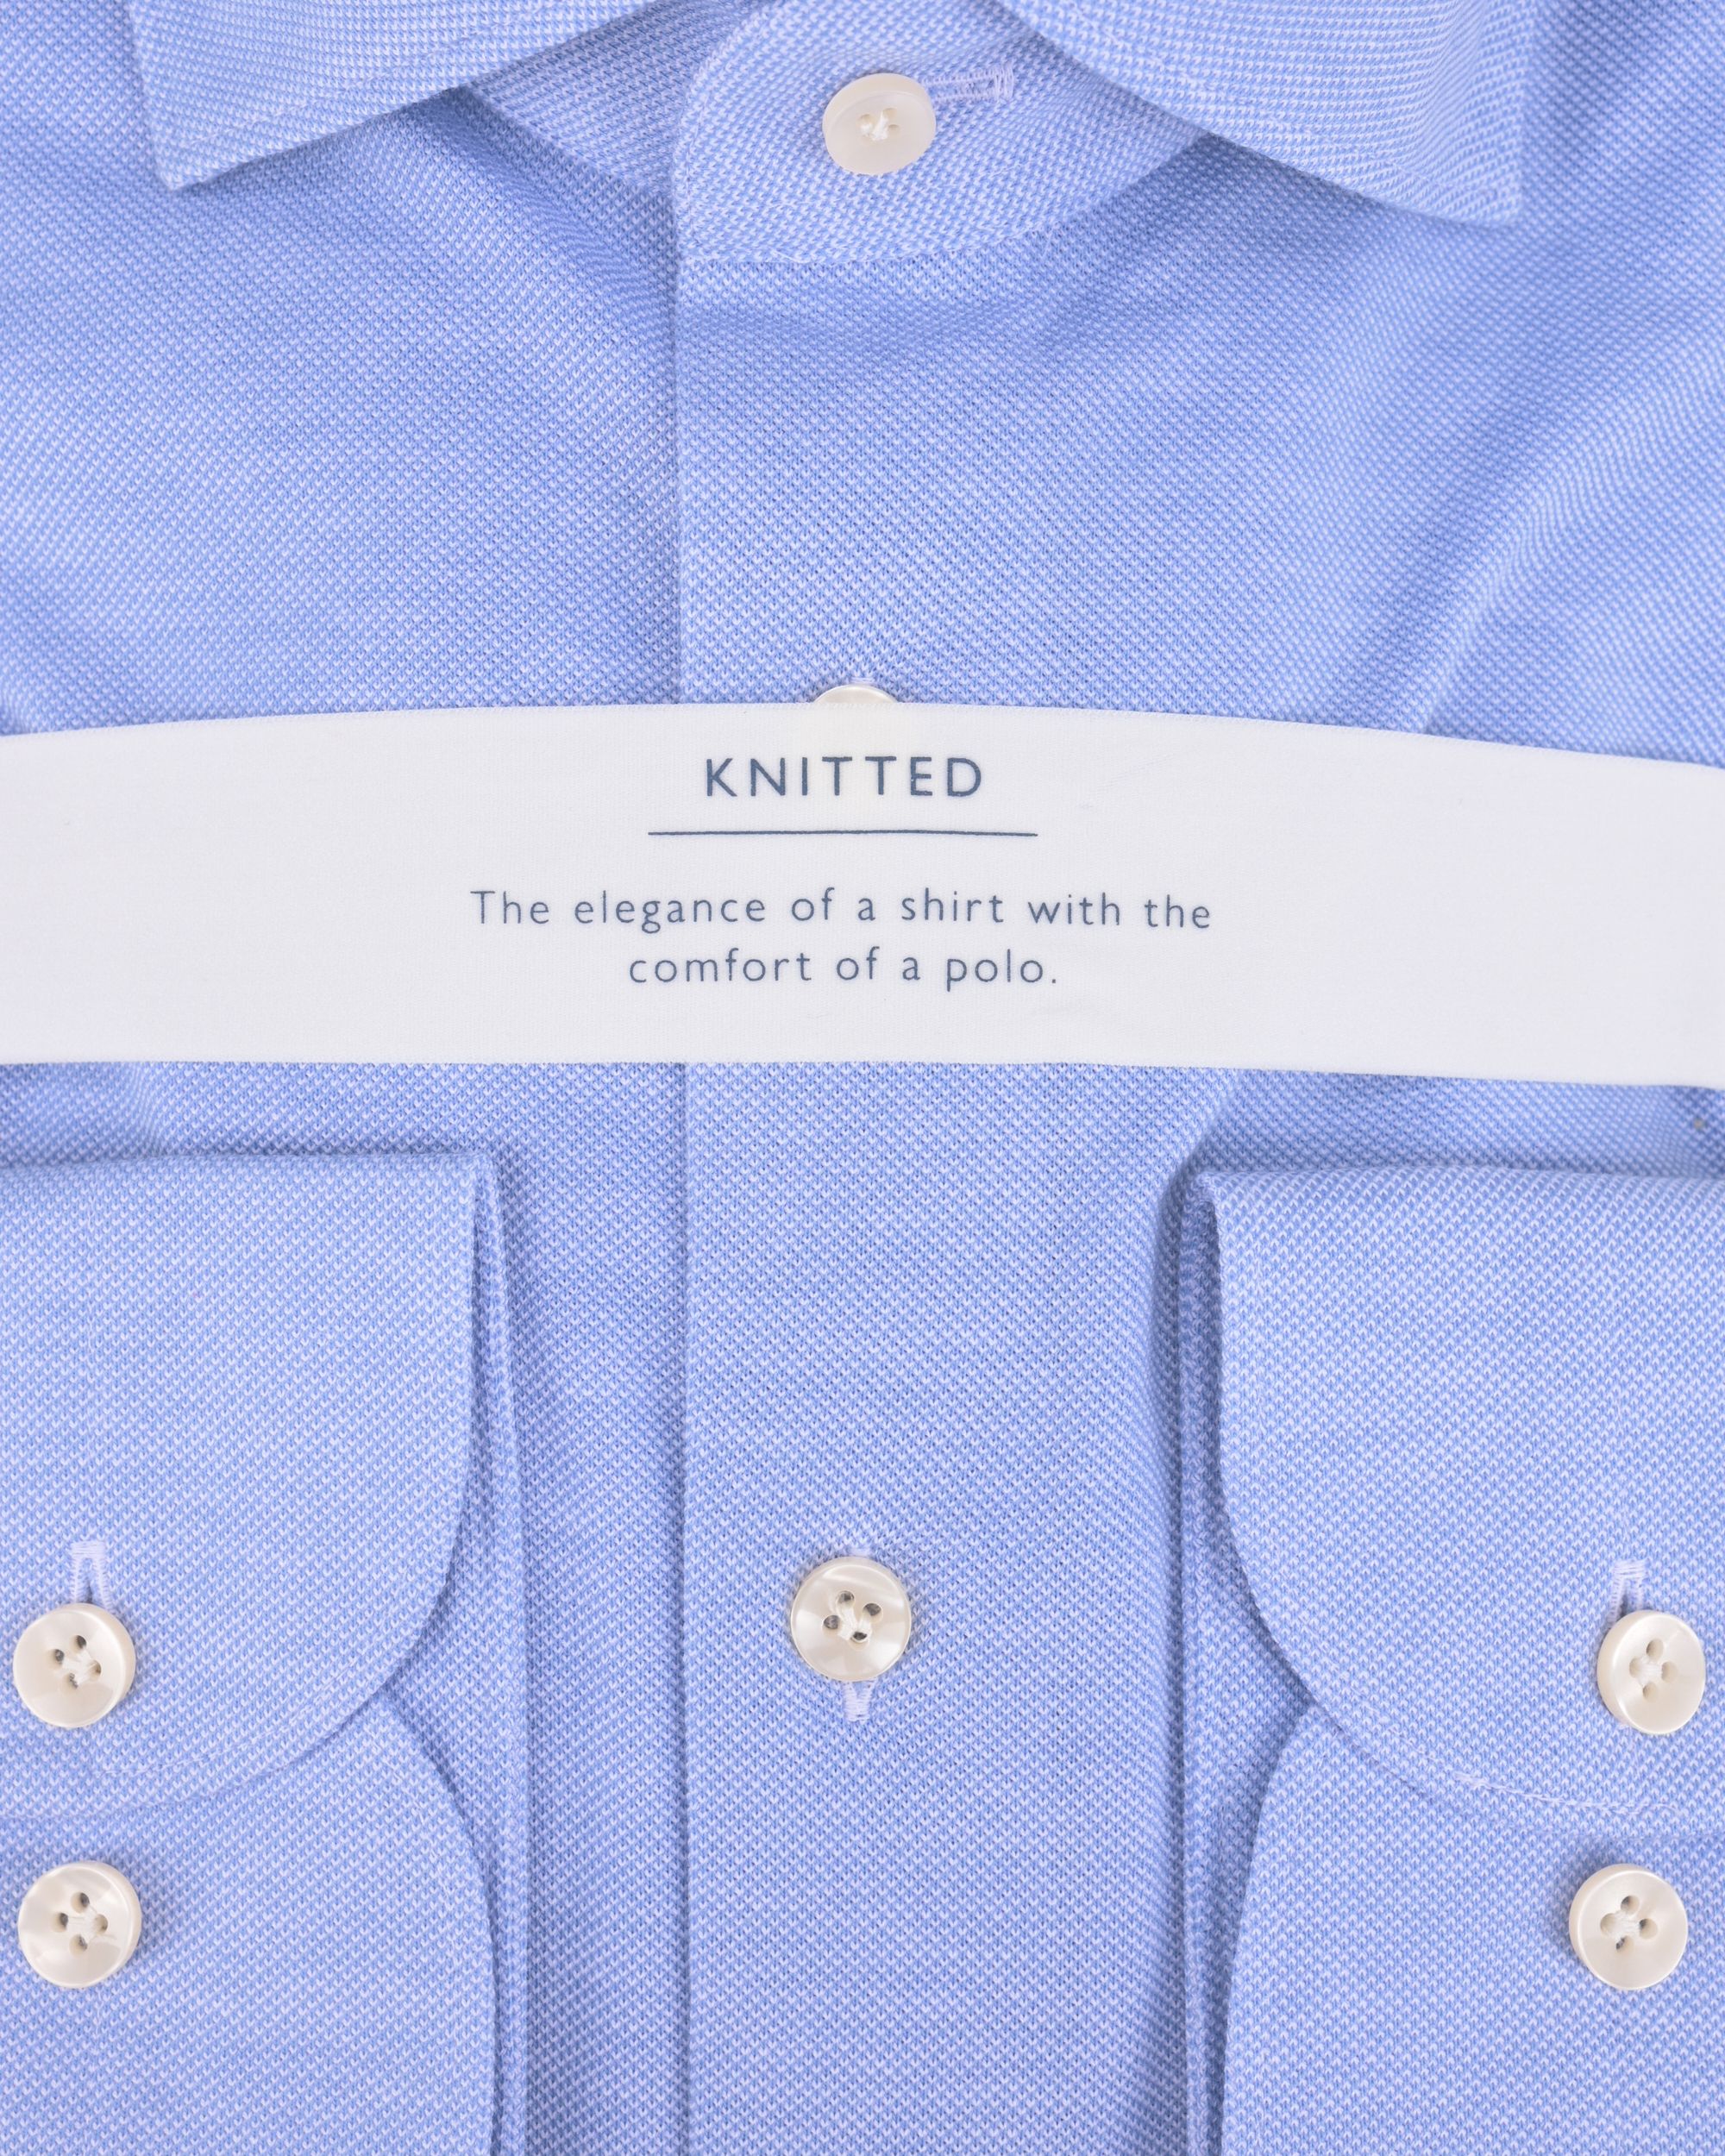 Profuomo Knitted Mercerised Overhemd LM Blauw 075257-001-37